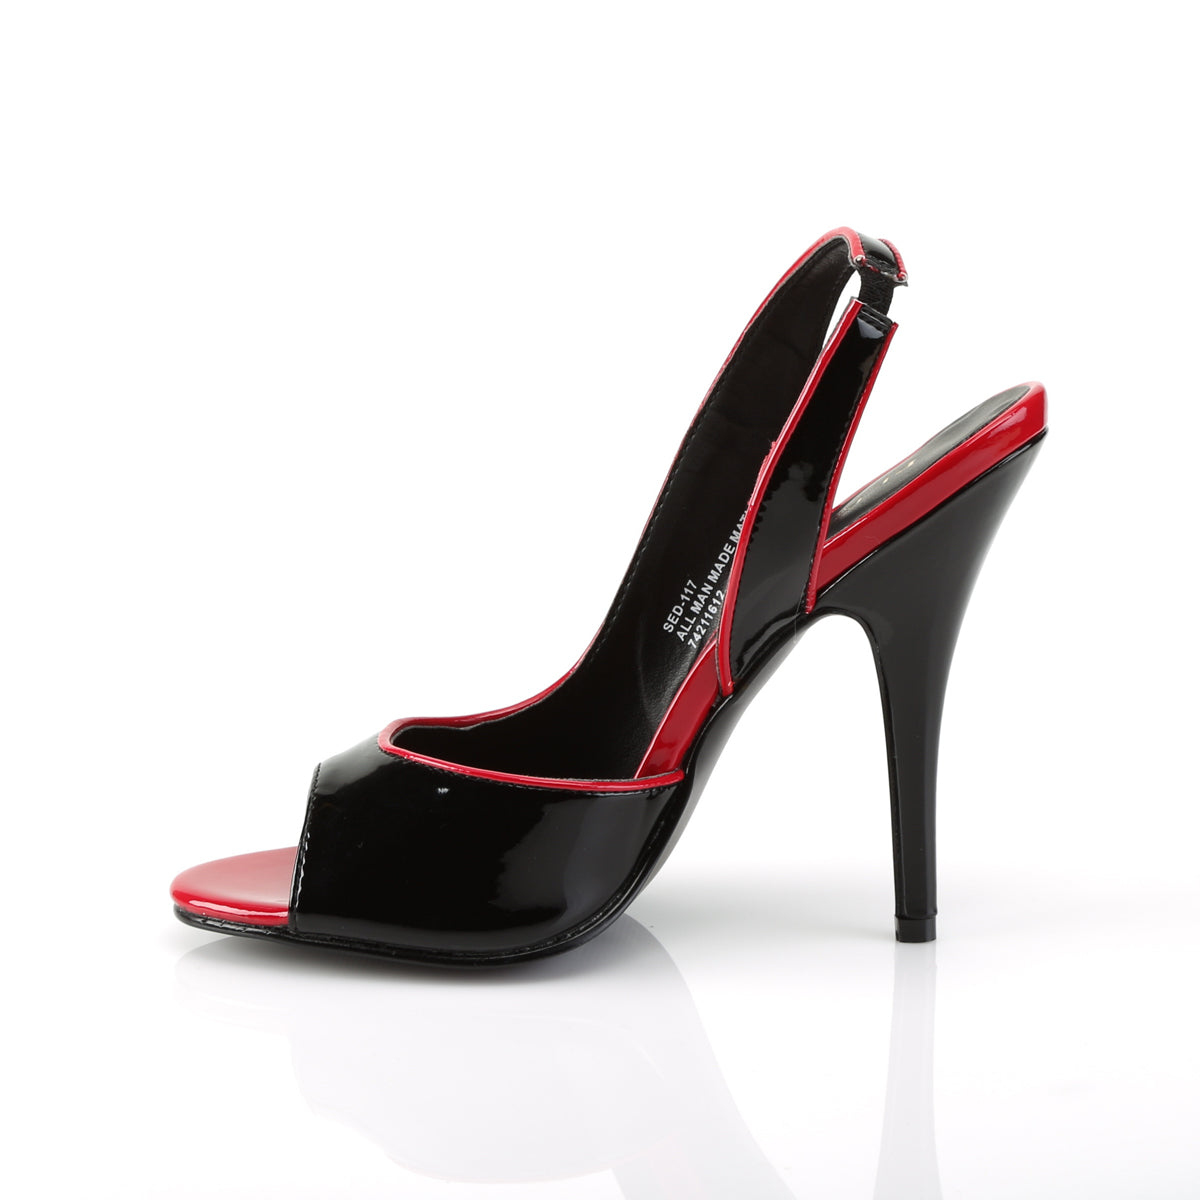 SEDUCE-117 Pleaser 5 Inch Heel Black and Red Fetish Footwear-Pleaser- Sexy Shoes Pole Dance Heels